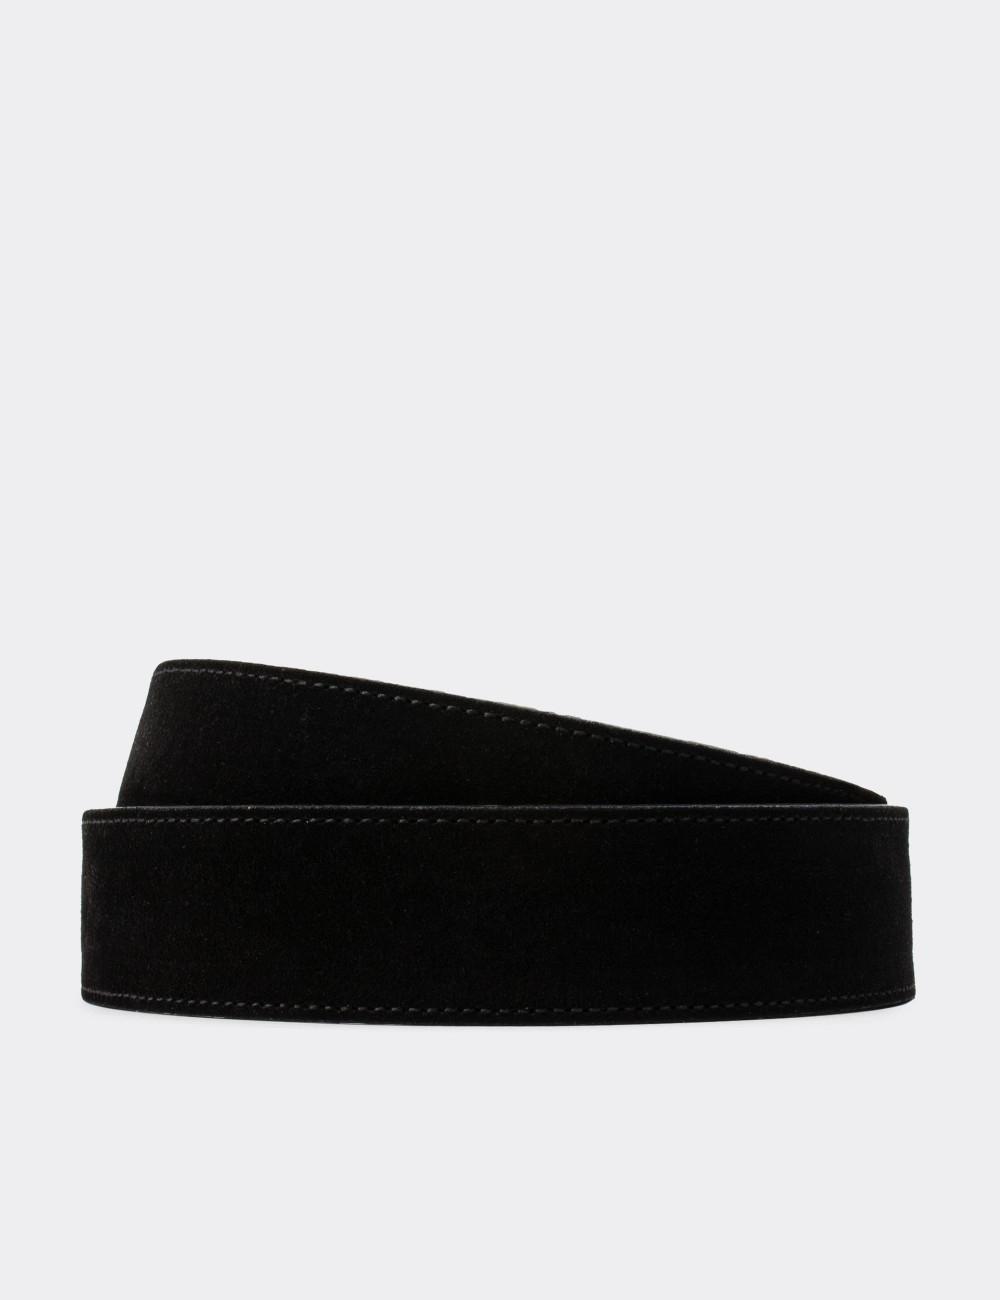 Suede Leather Black Men's Belt - K0410MSYHW01